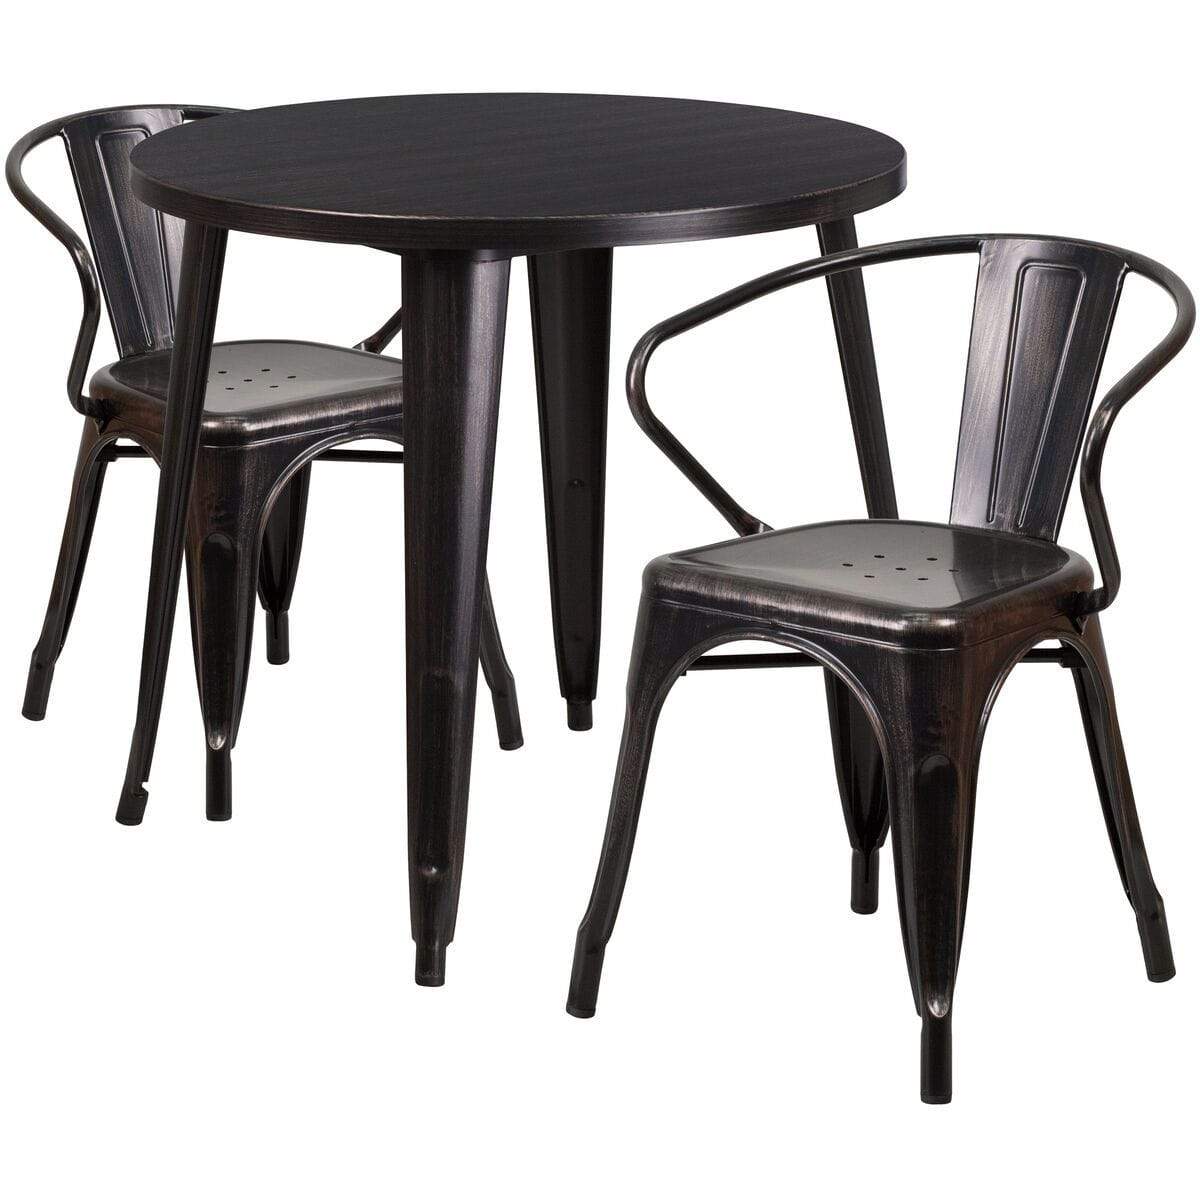 Samuel Norman & Assoc. Furnishings Metal Colorful Table and Chair Sets Samuel Norman & Assoc. Furnishings 30RD Aged Black Metal Set